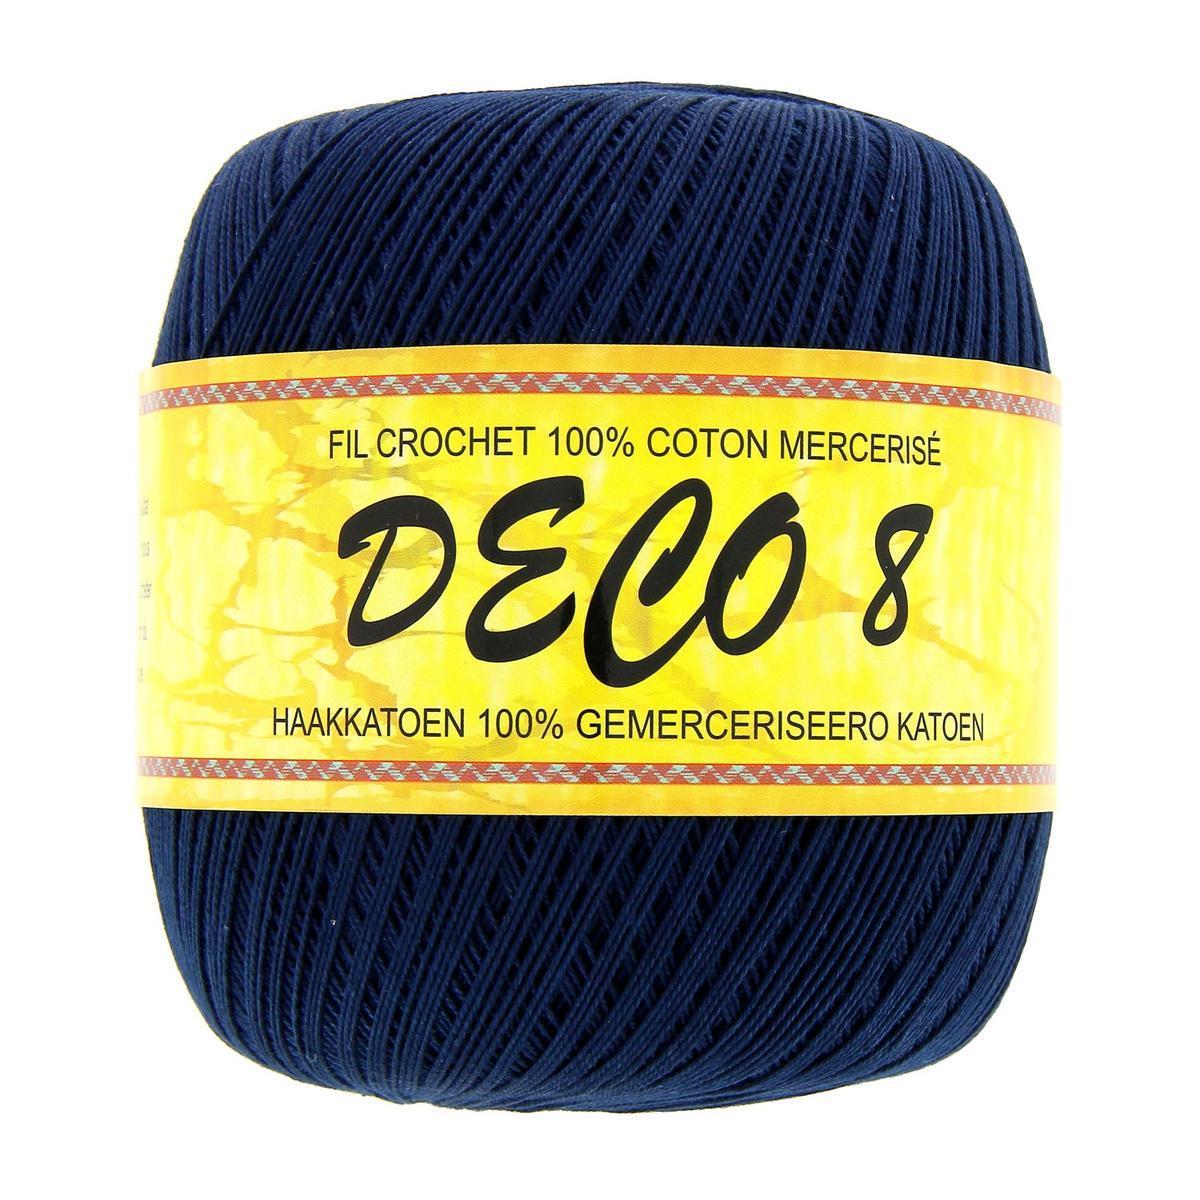 Fil pour crochet - Coton - 100 g - Bleu marine